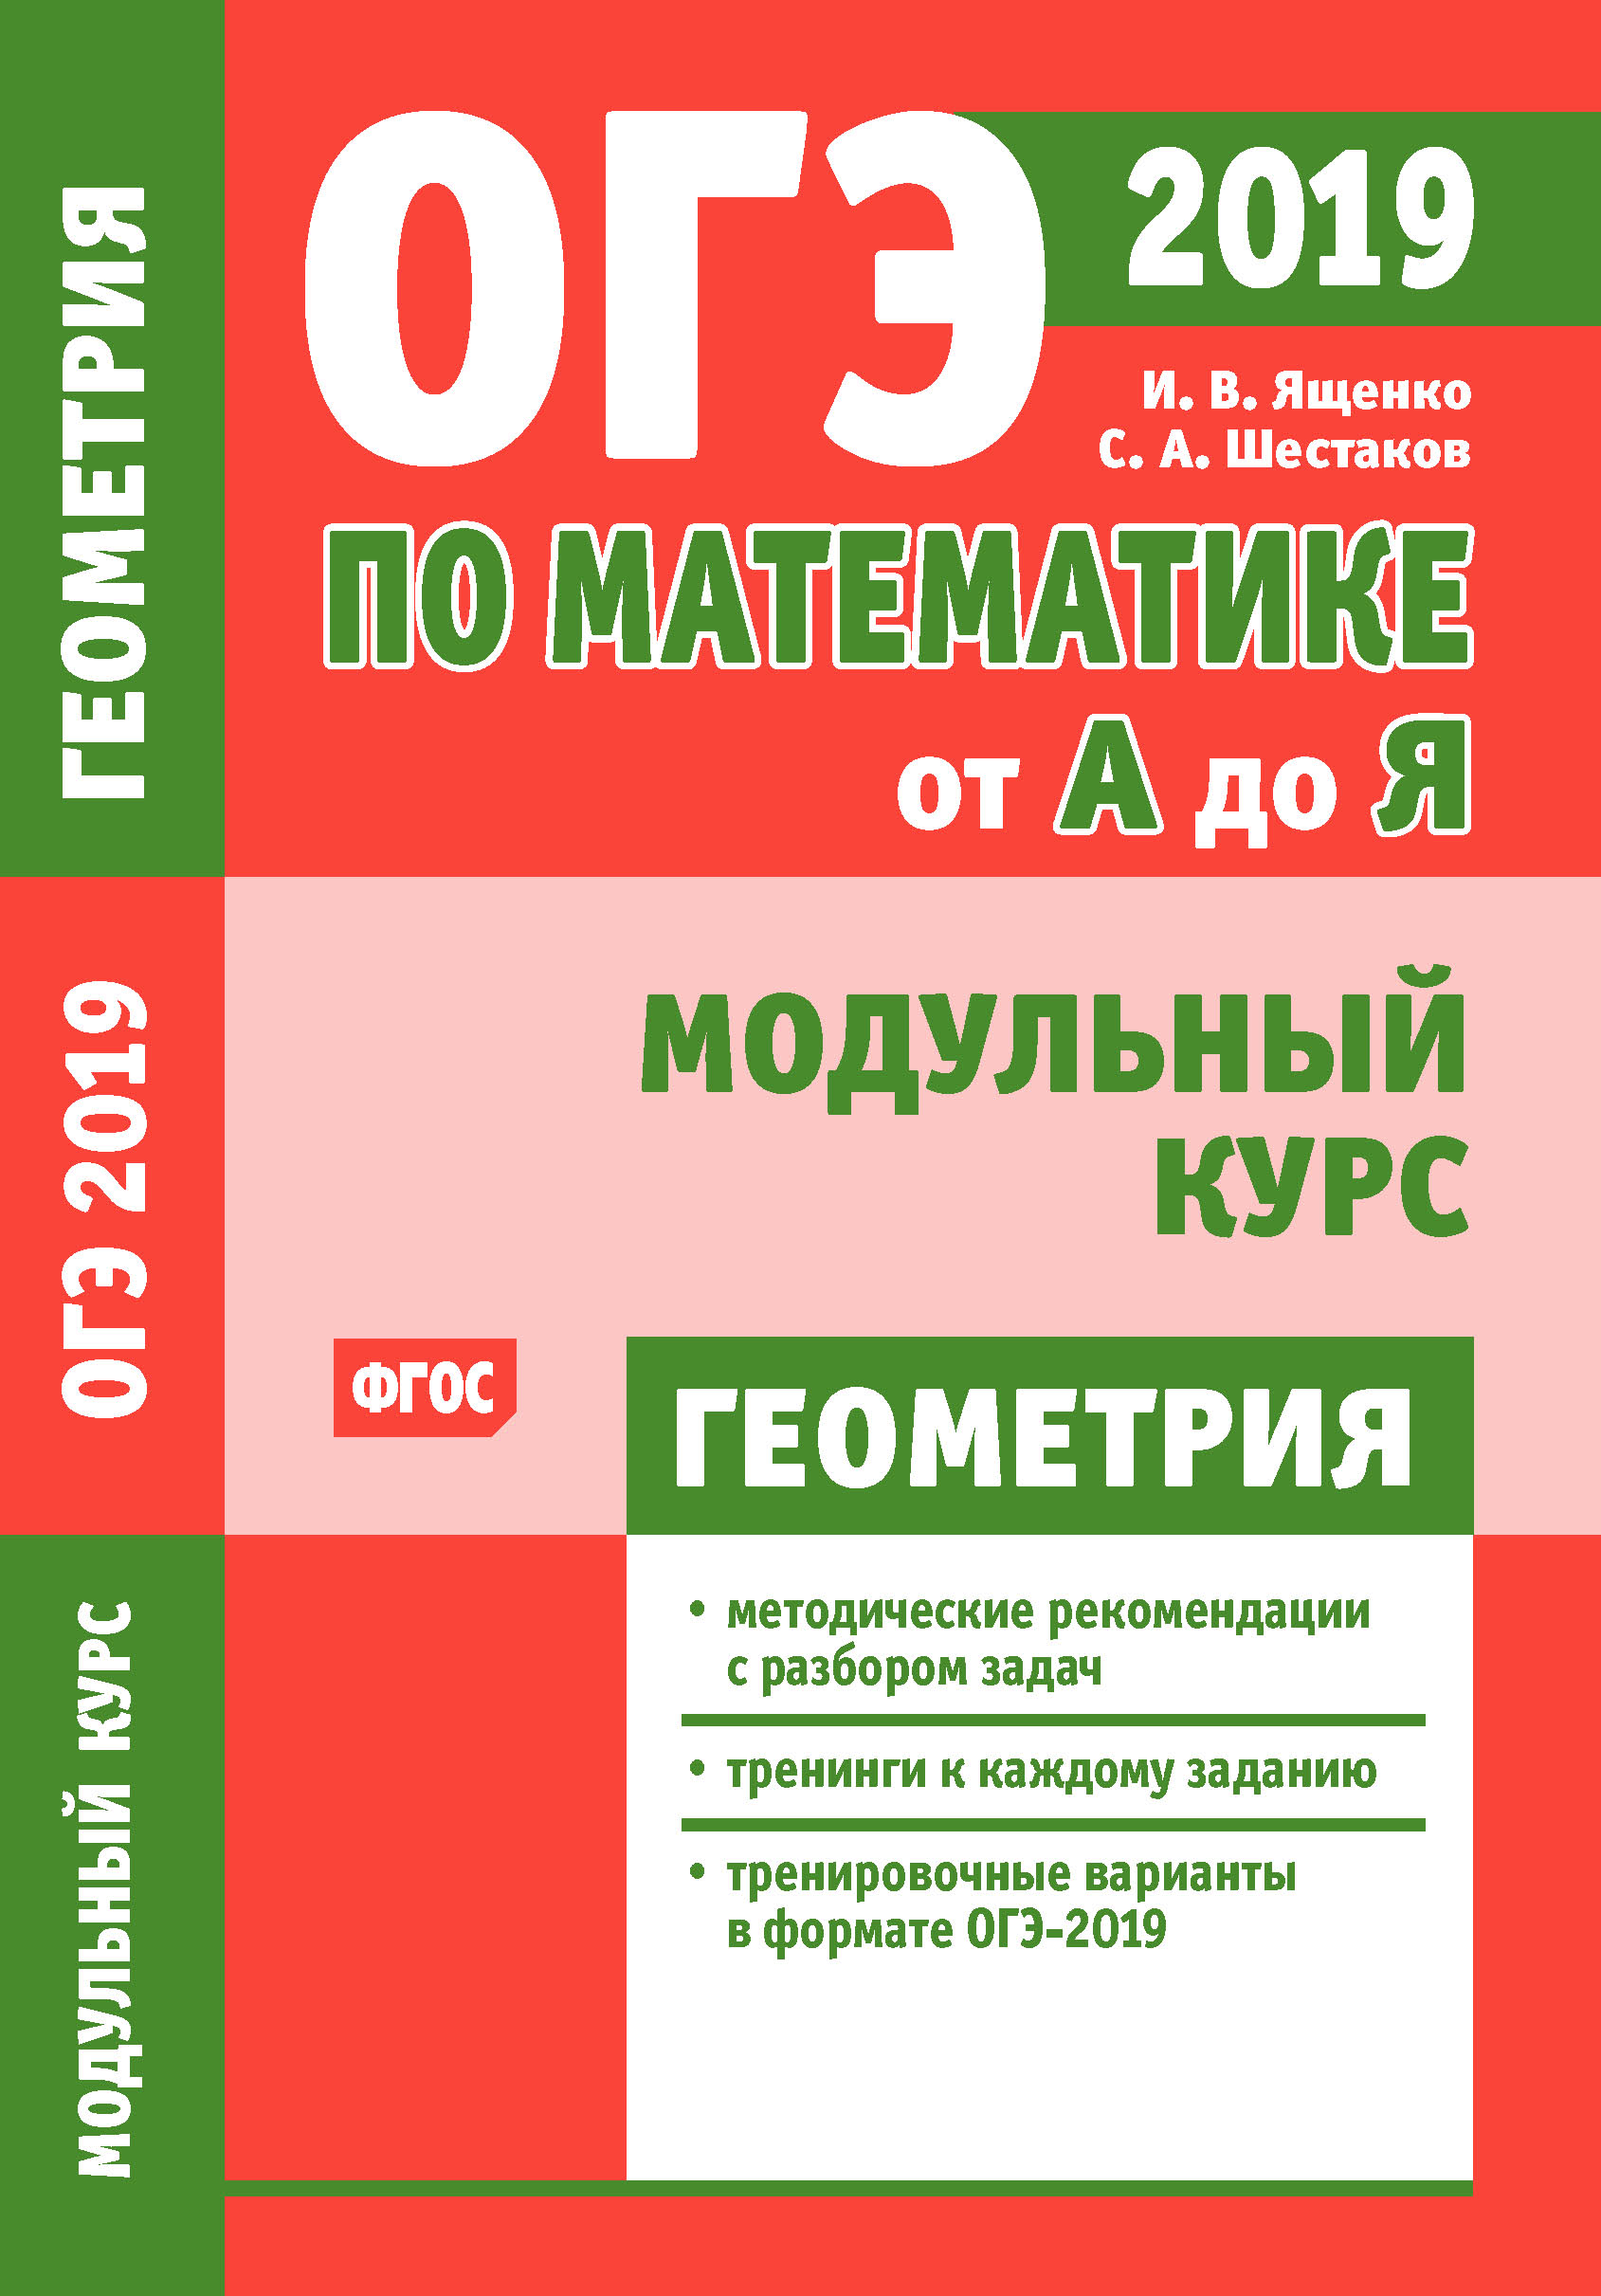 Огэ математике 2019 ященко